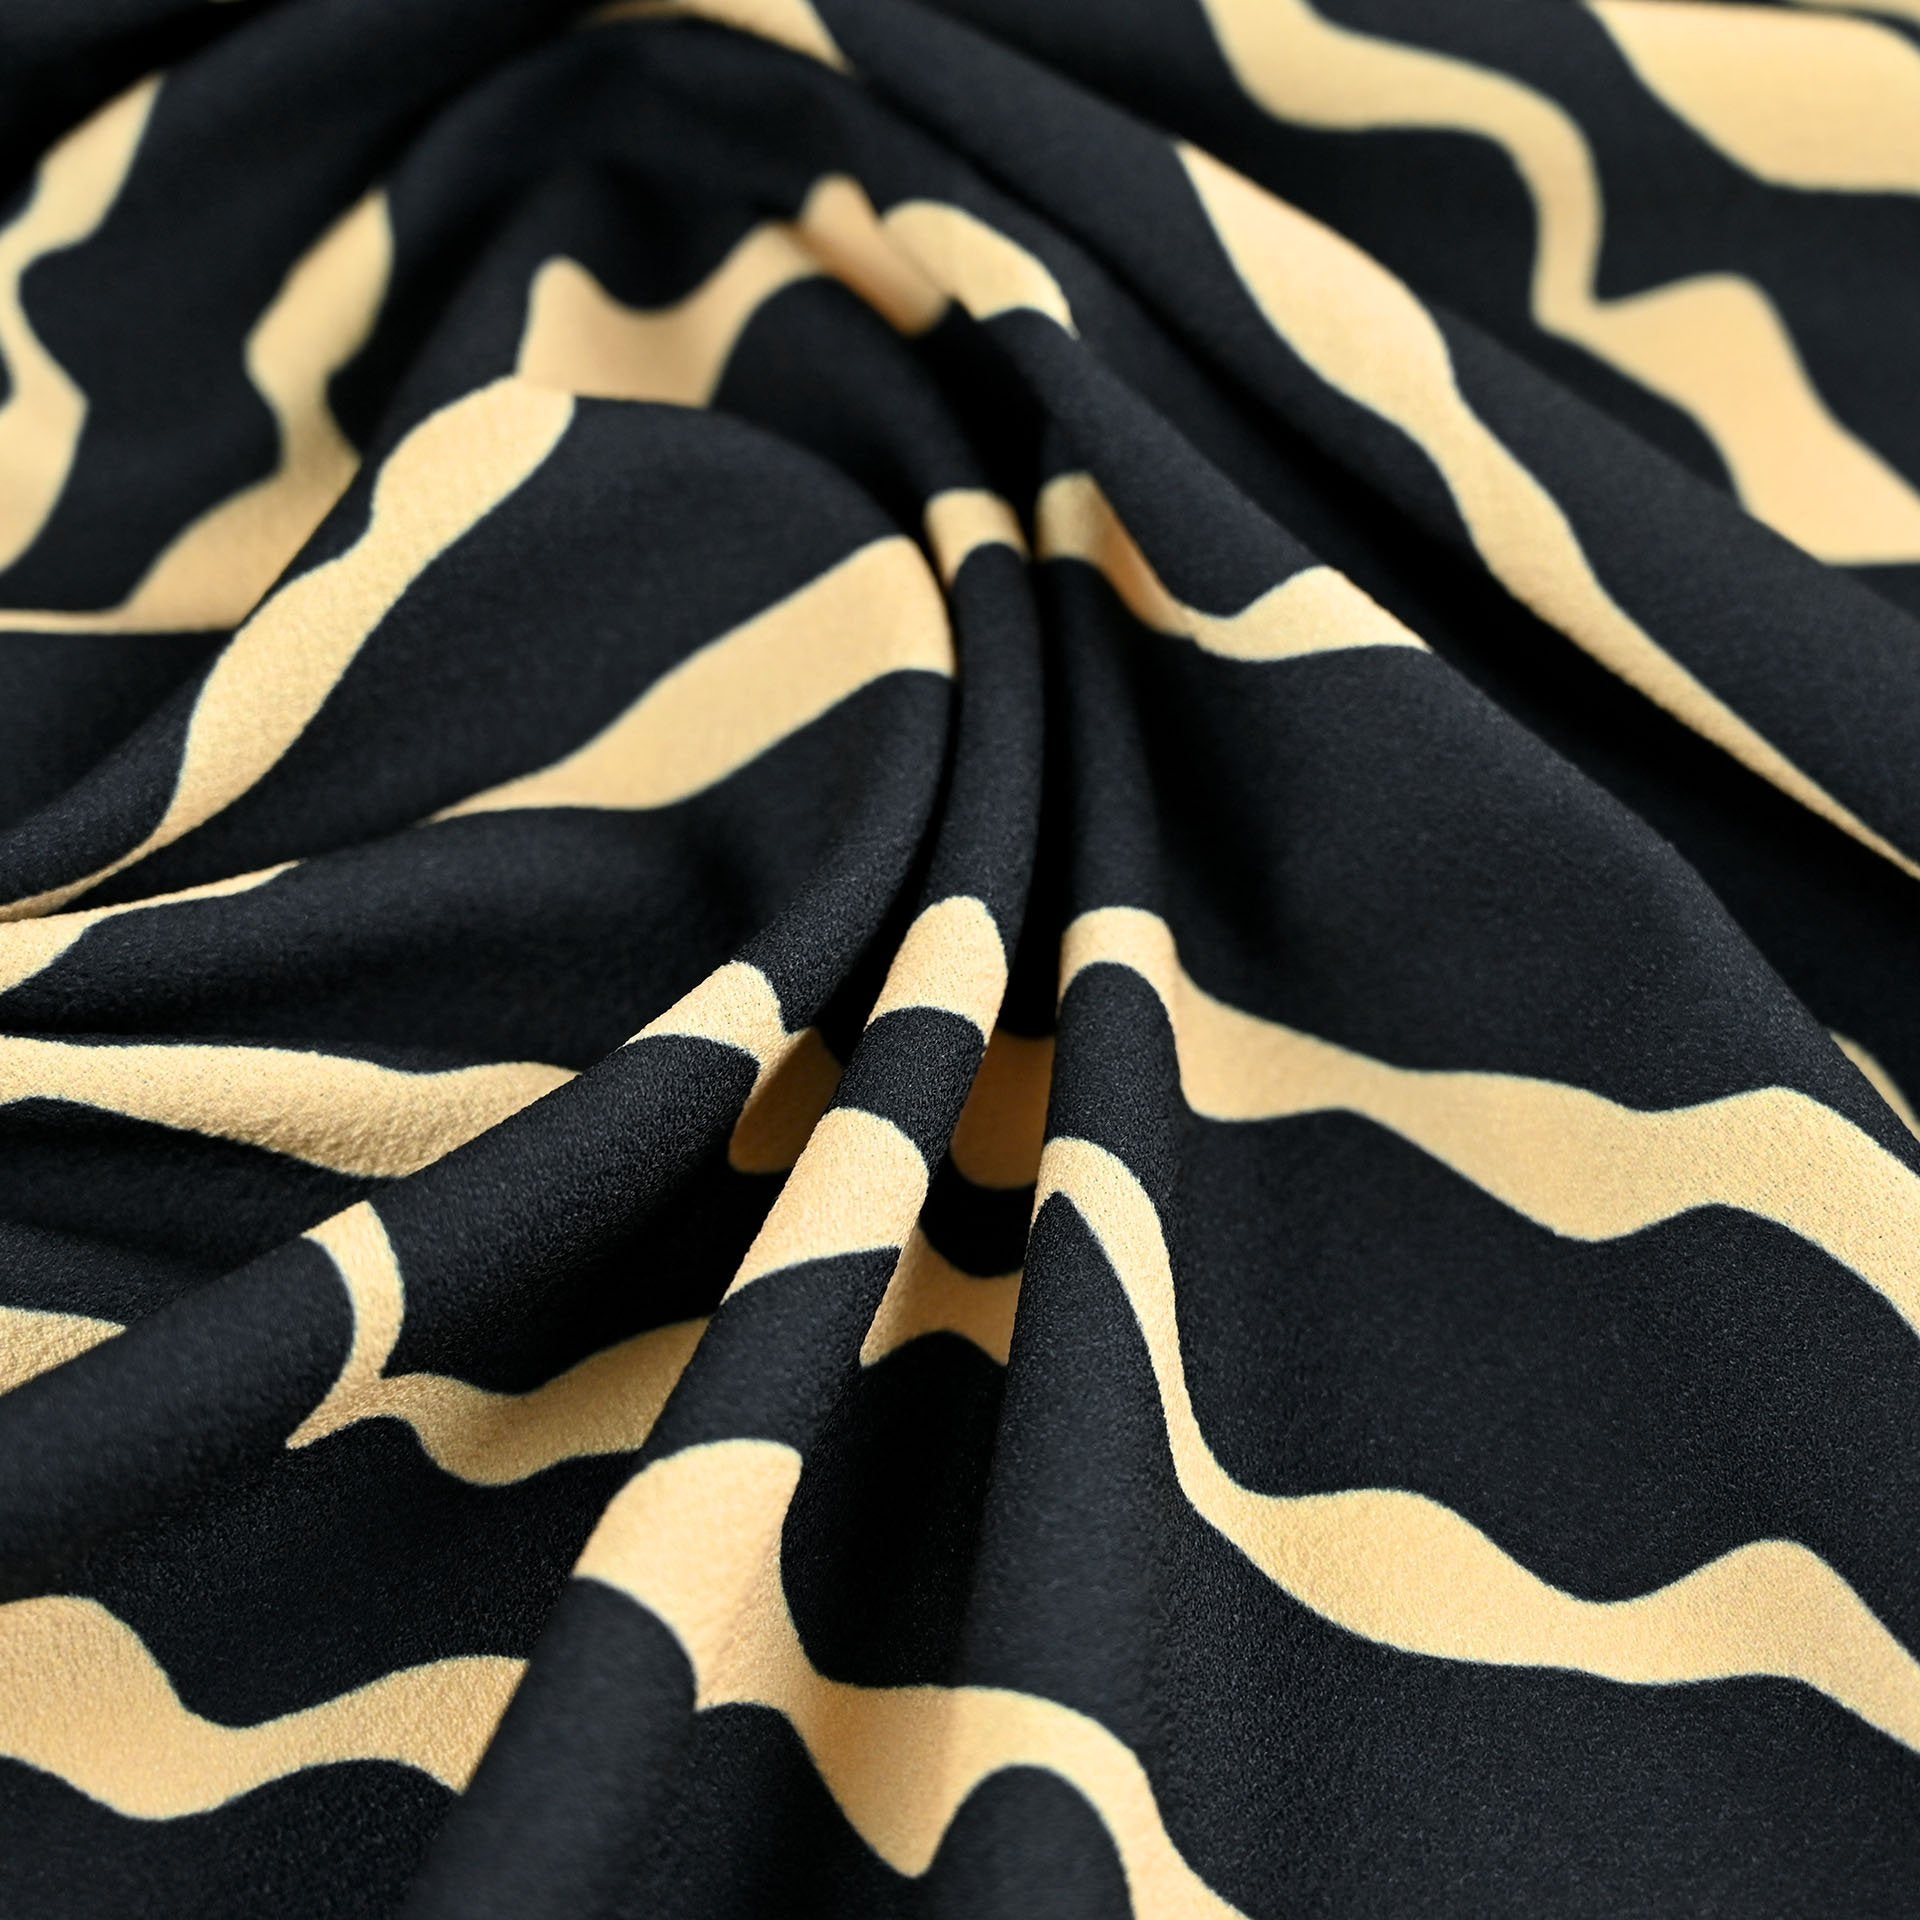 Navy Print Crepe fabric